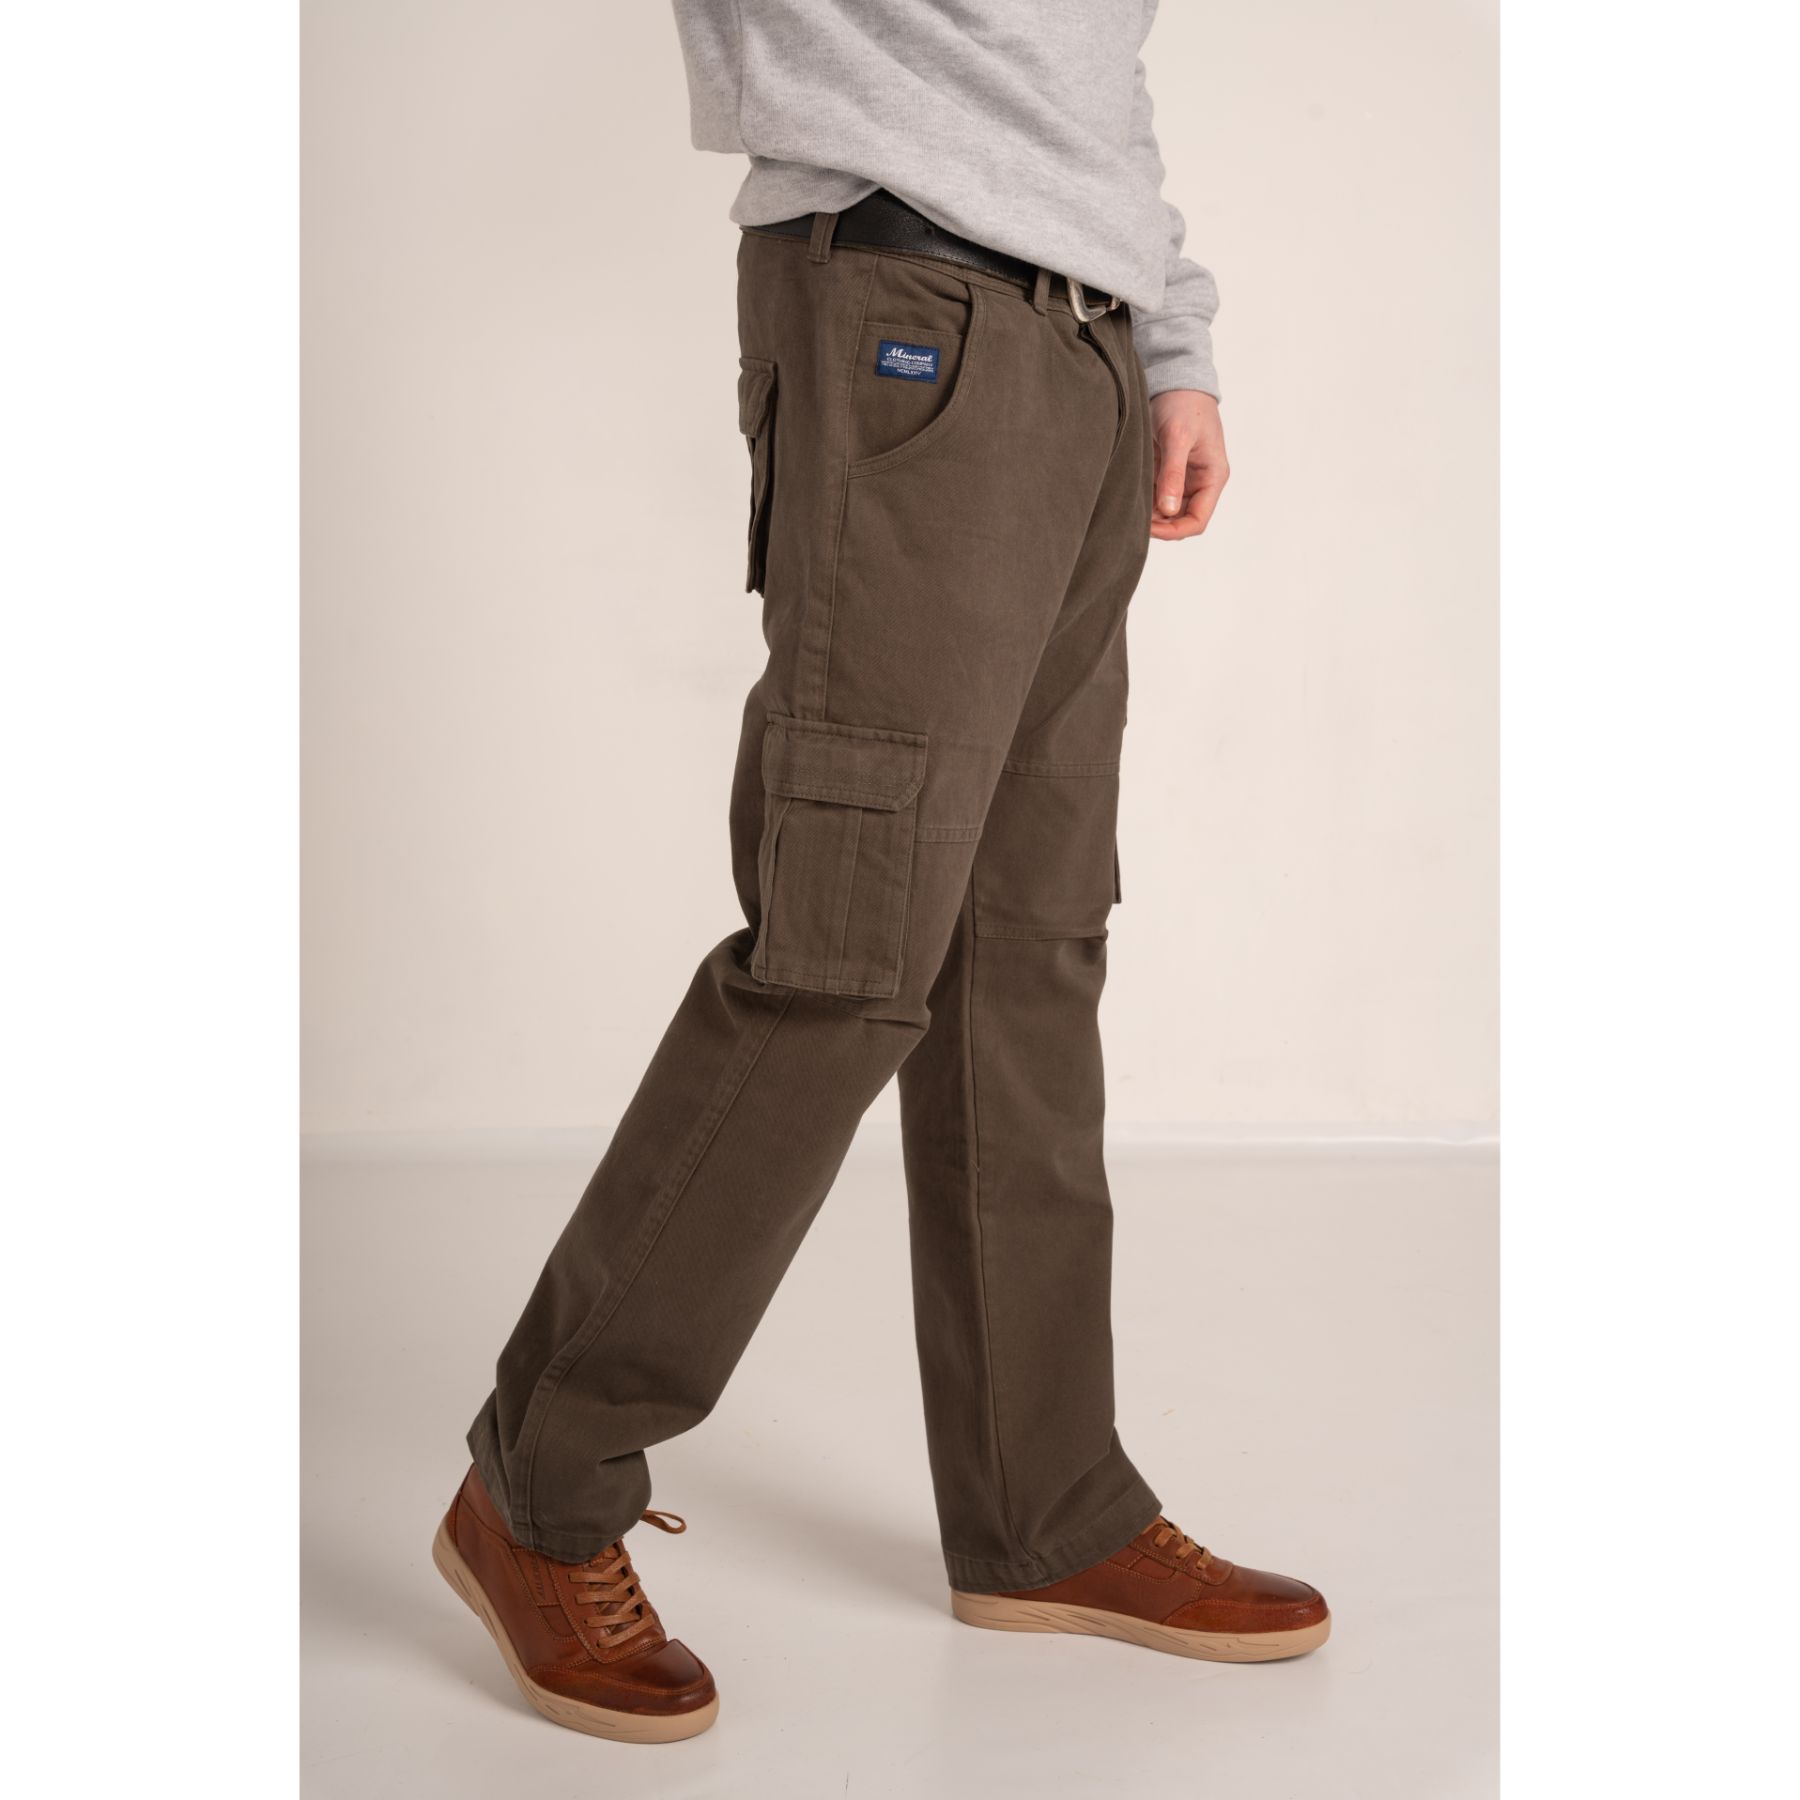 Buy Khaki Snap Pocket Cargo Pants for Men Online at Bewakoof